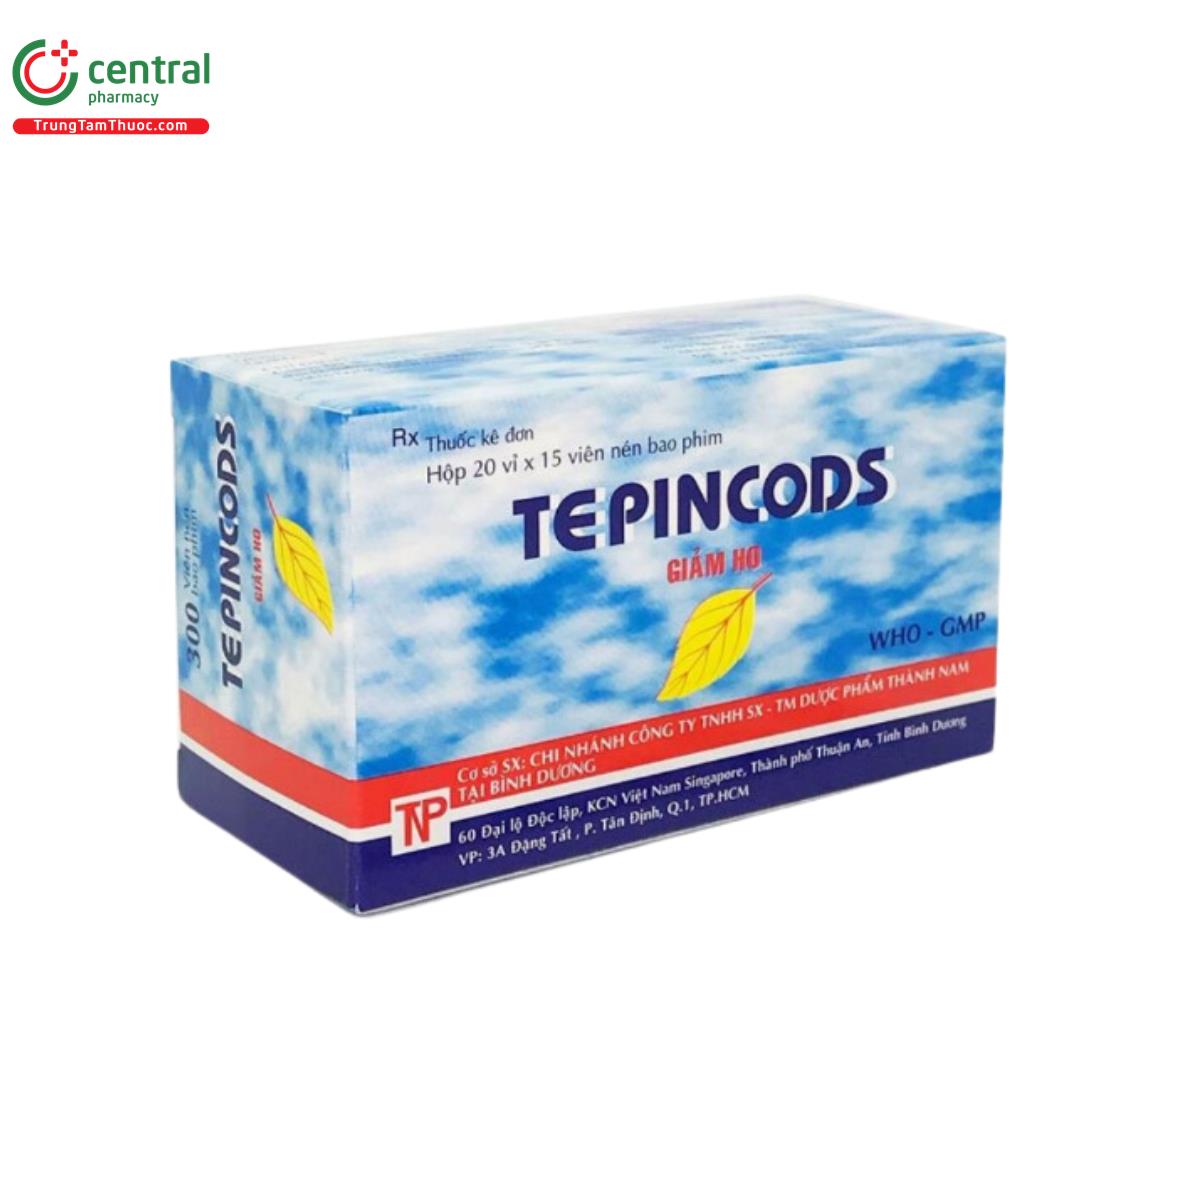 tepincods 3 M5412